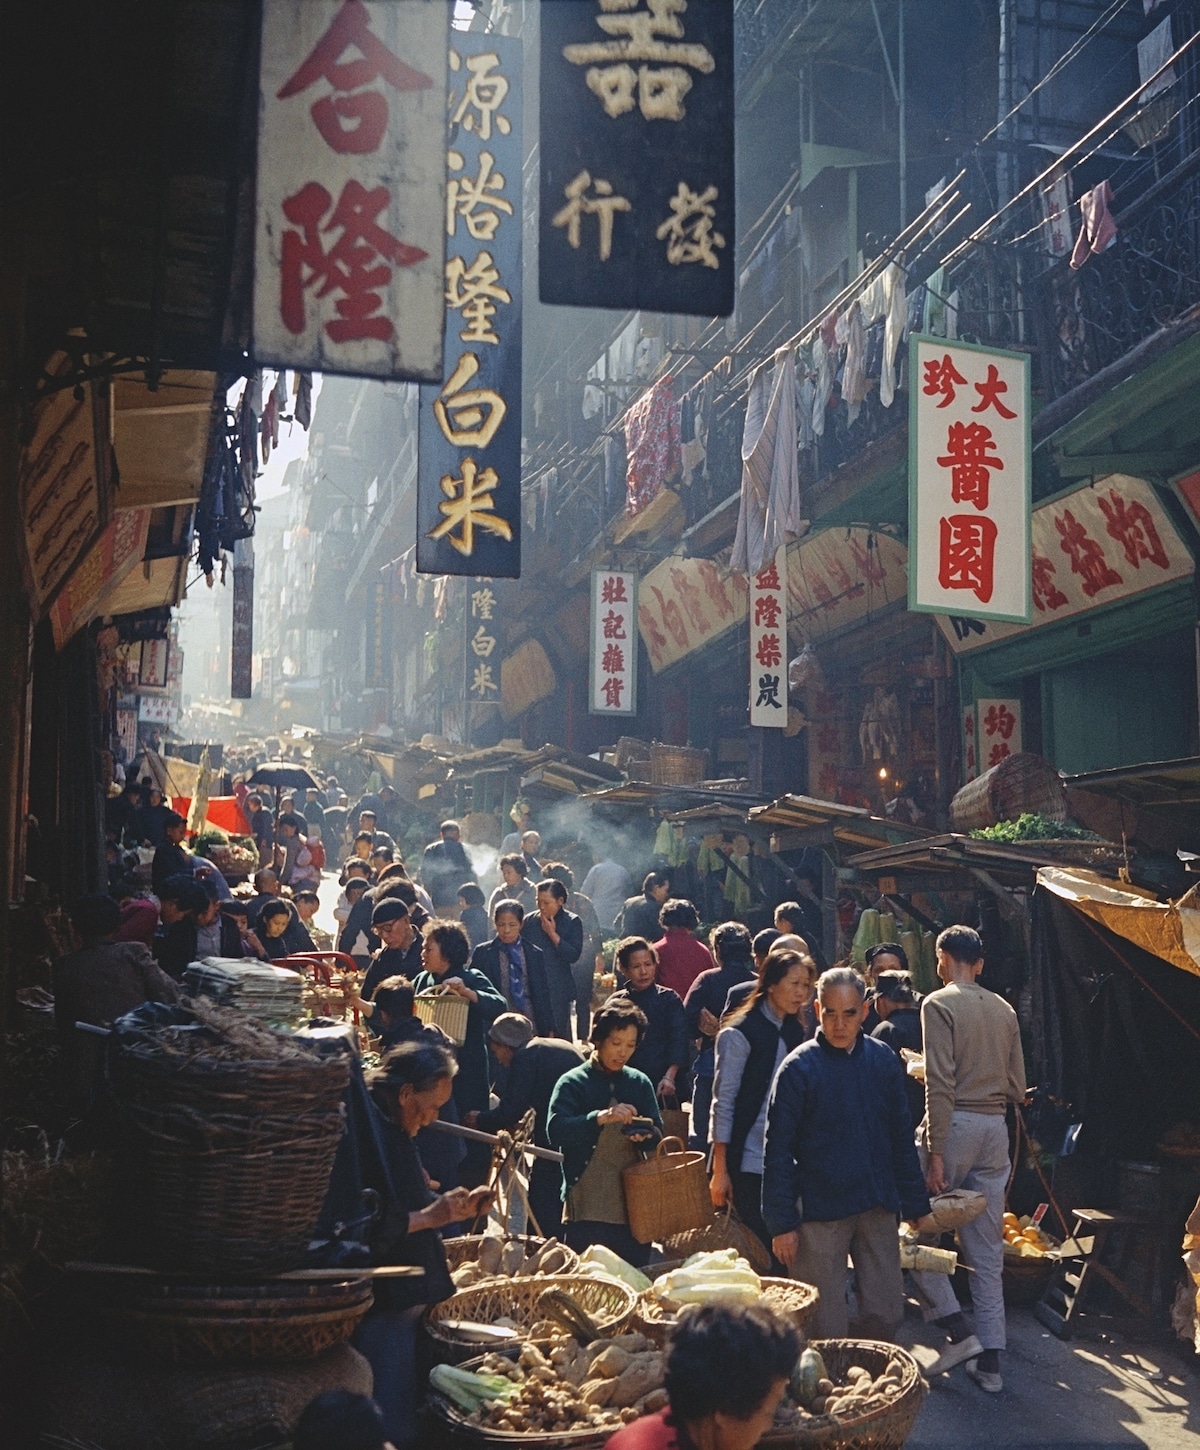 Fan Ho - Hong Kong Street Photography at the Blue Lotus Gallery